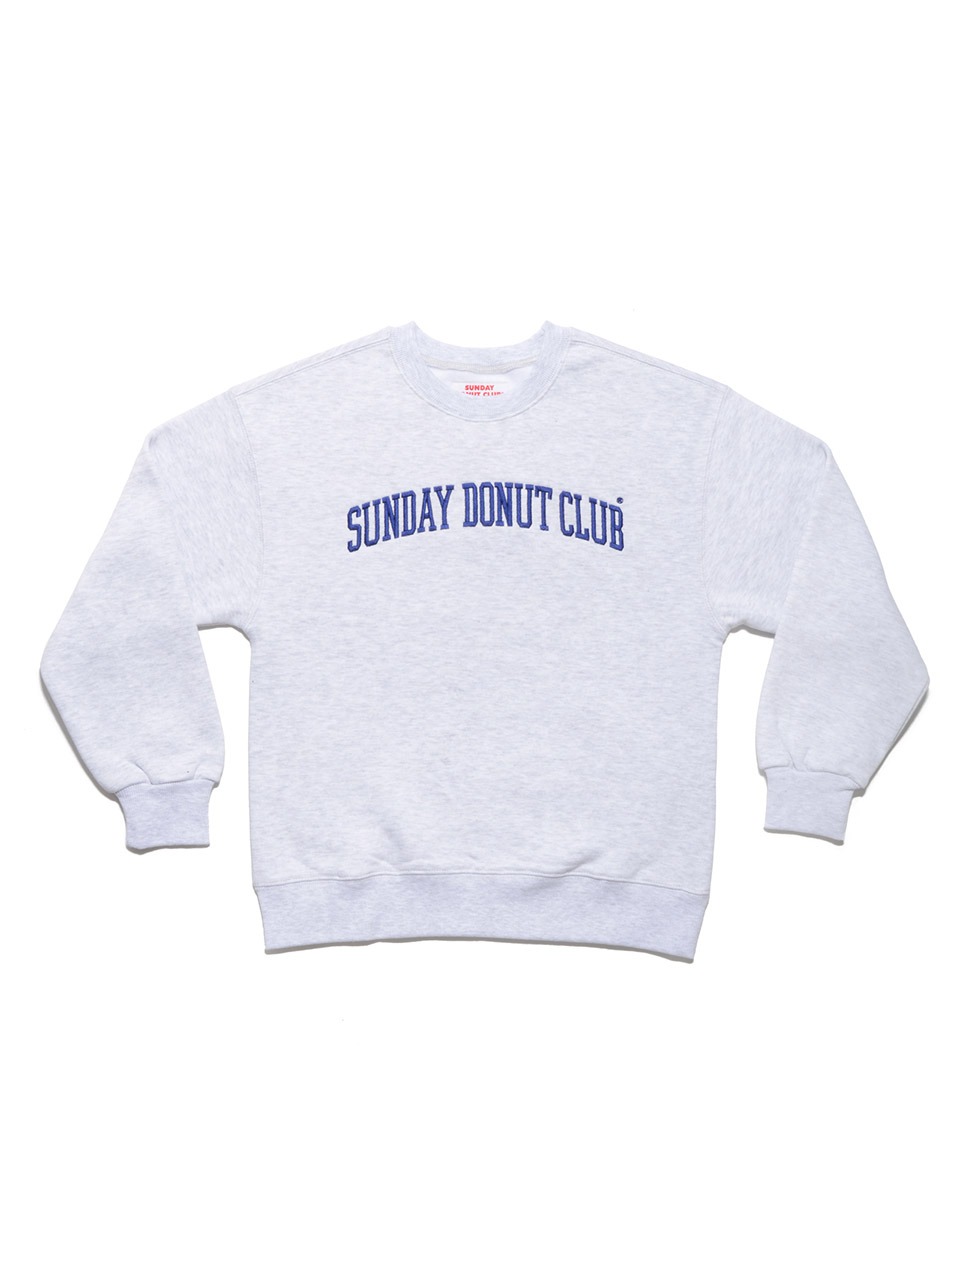 SUNDAY DONUT CLUB SWEATSHIRT [Light Grey]